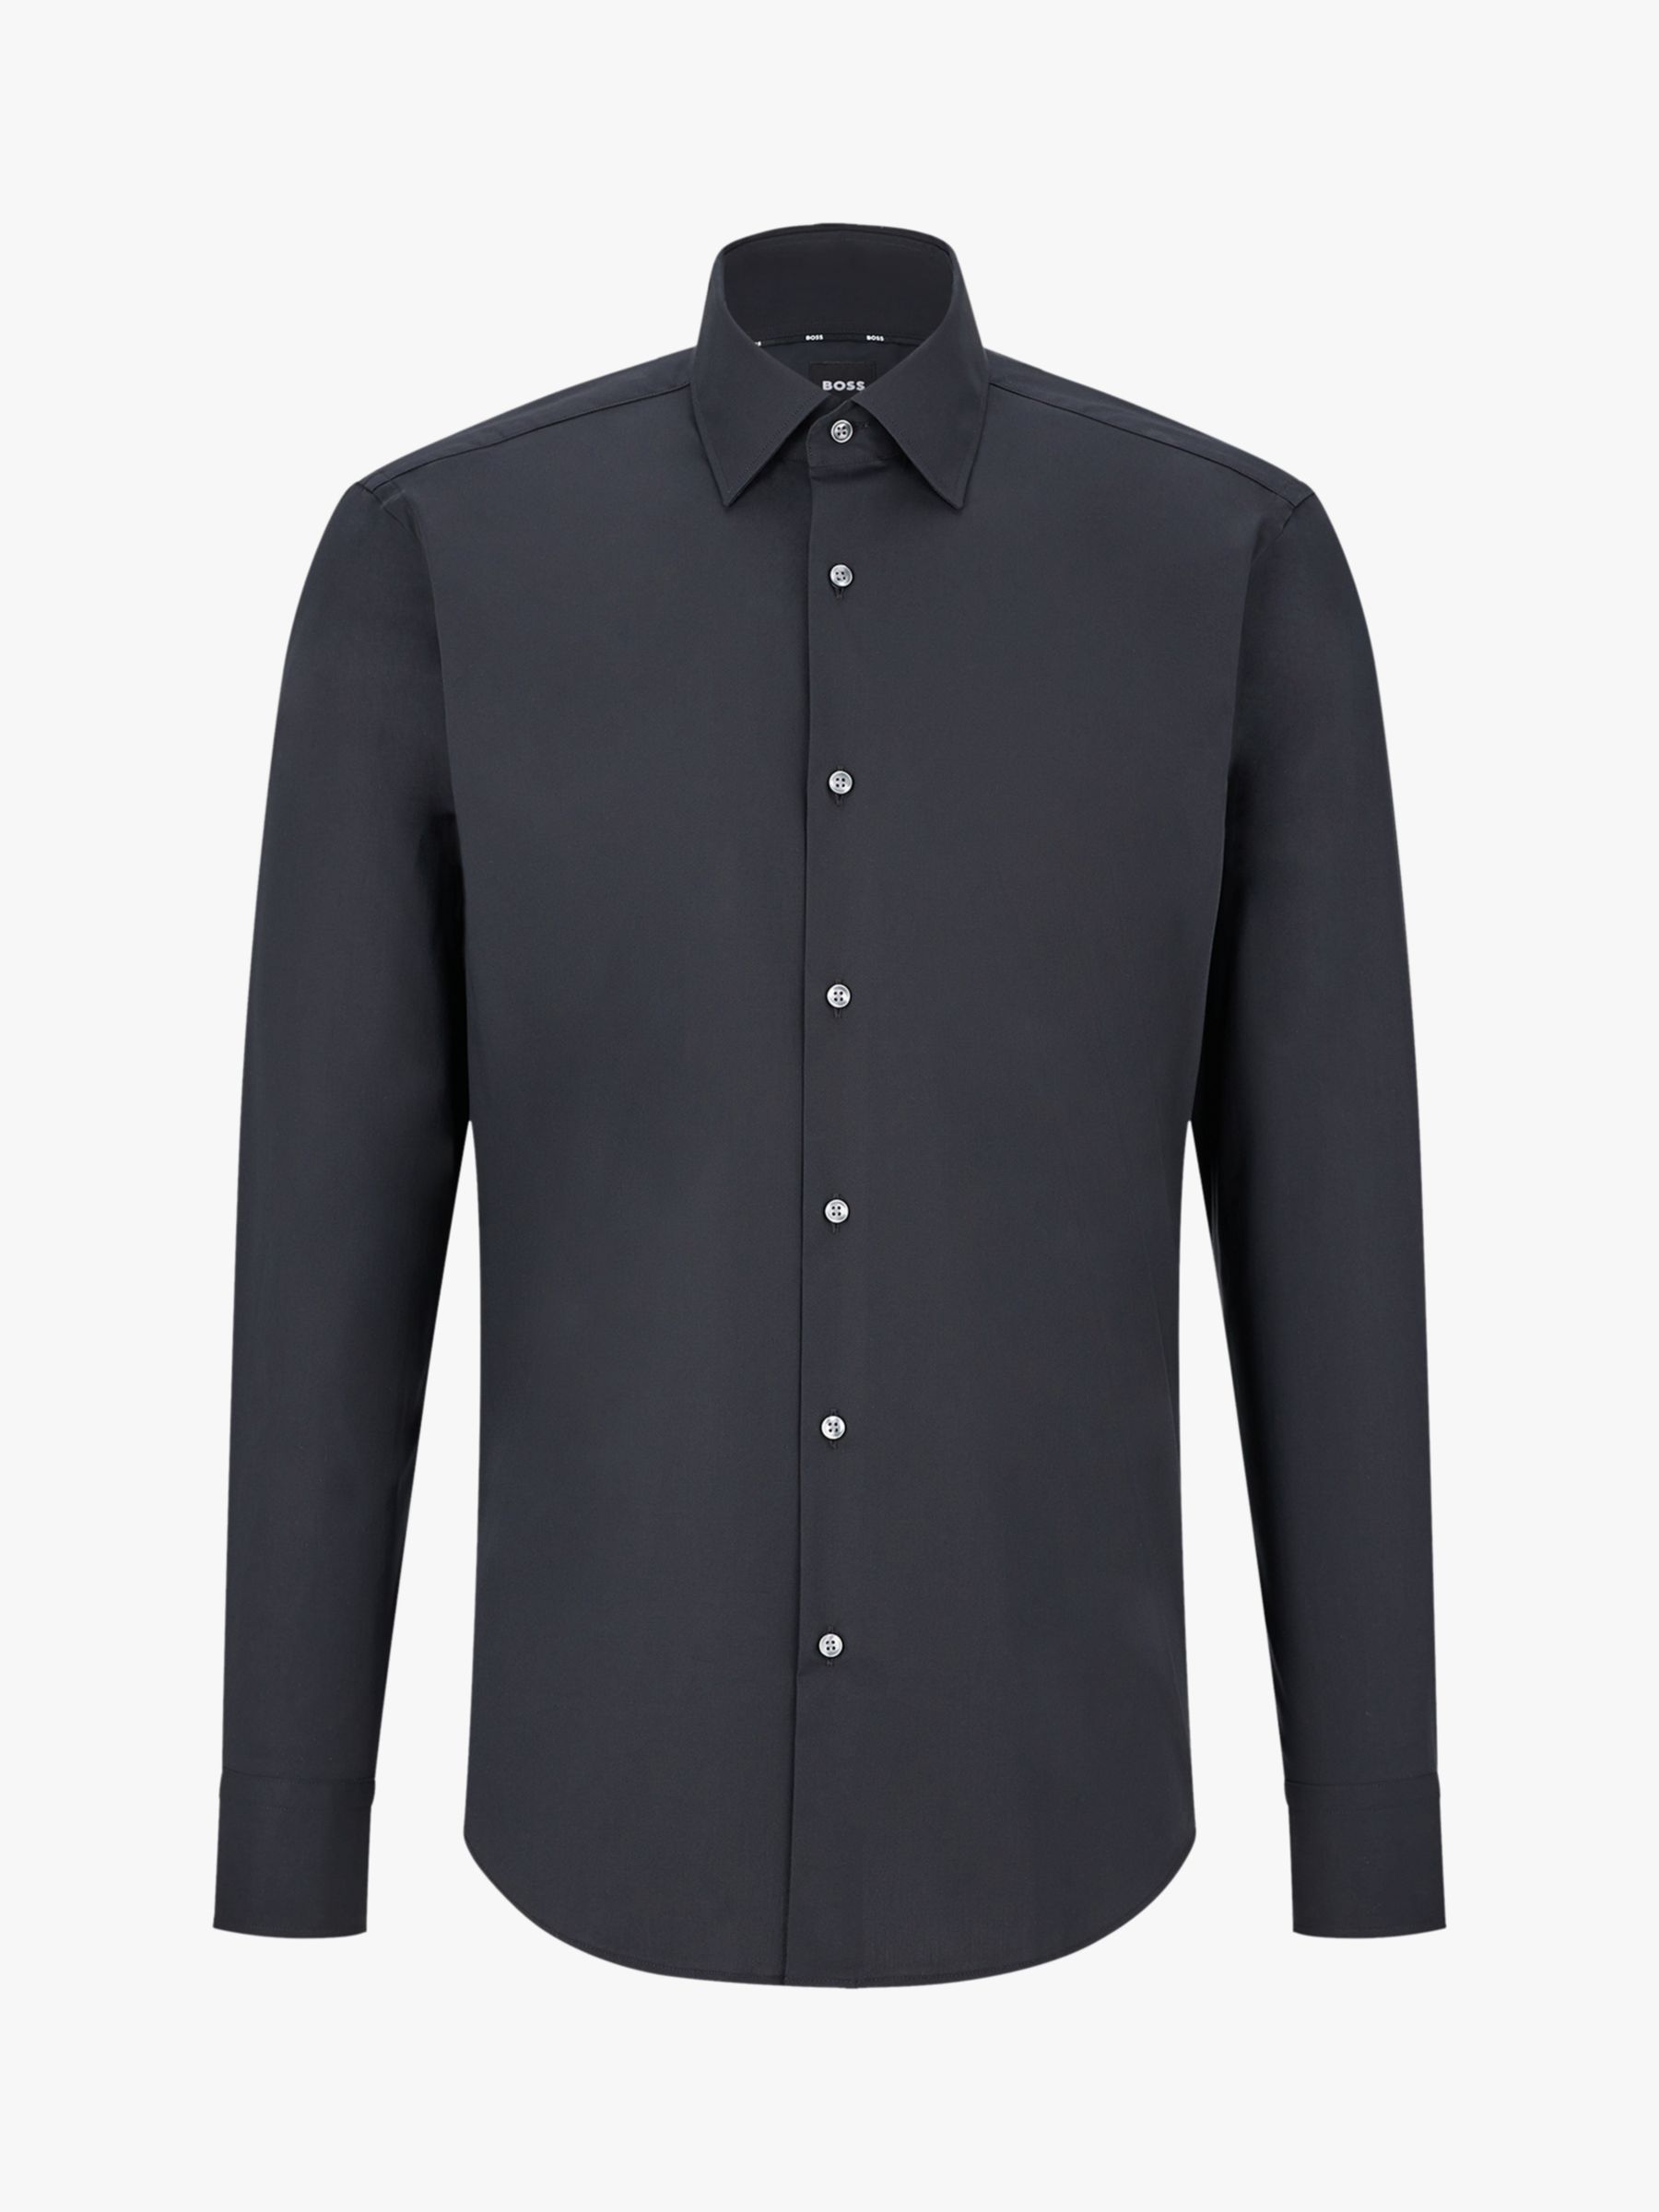 HUGO BOSS Joe Kent Regular Fit Shirt, Black at John Lewis & Partners